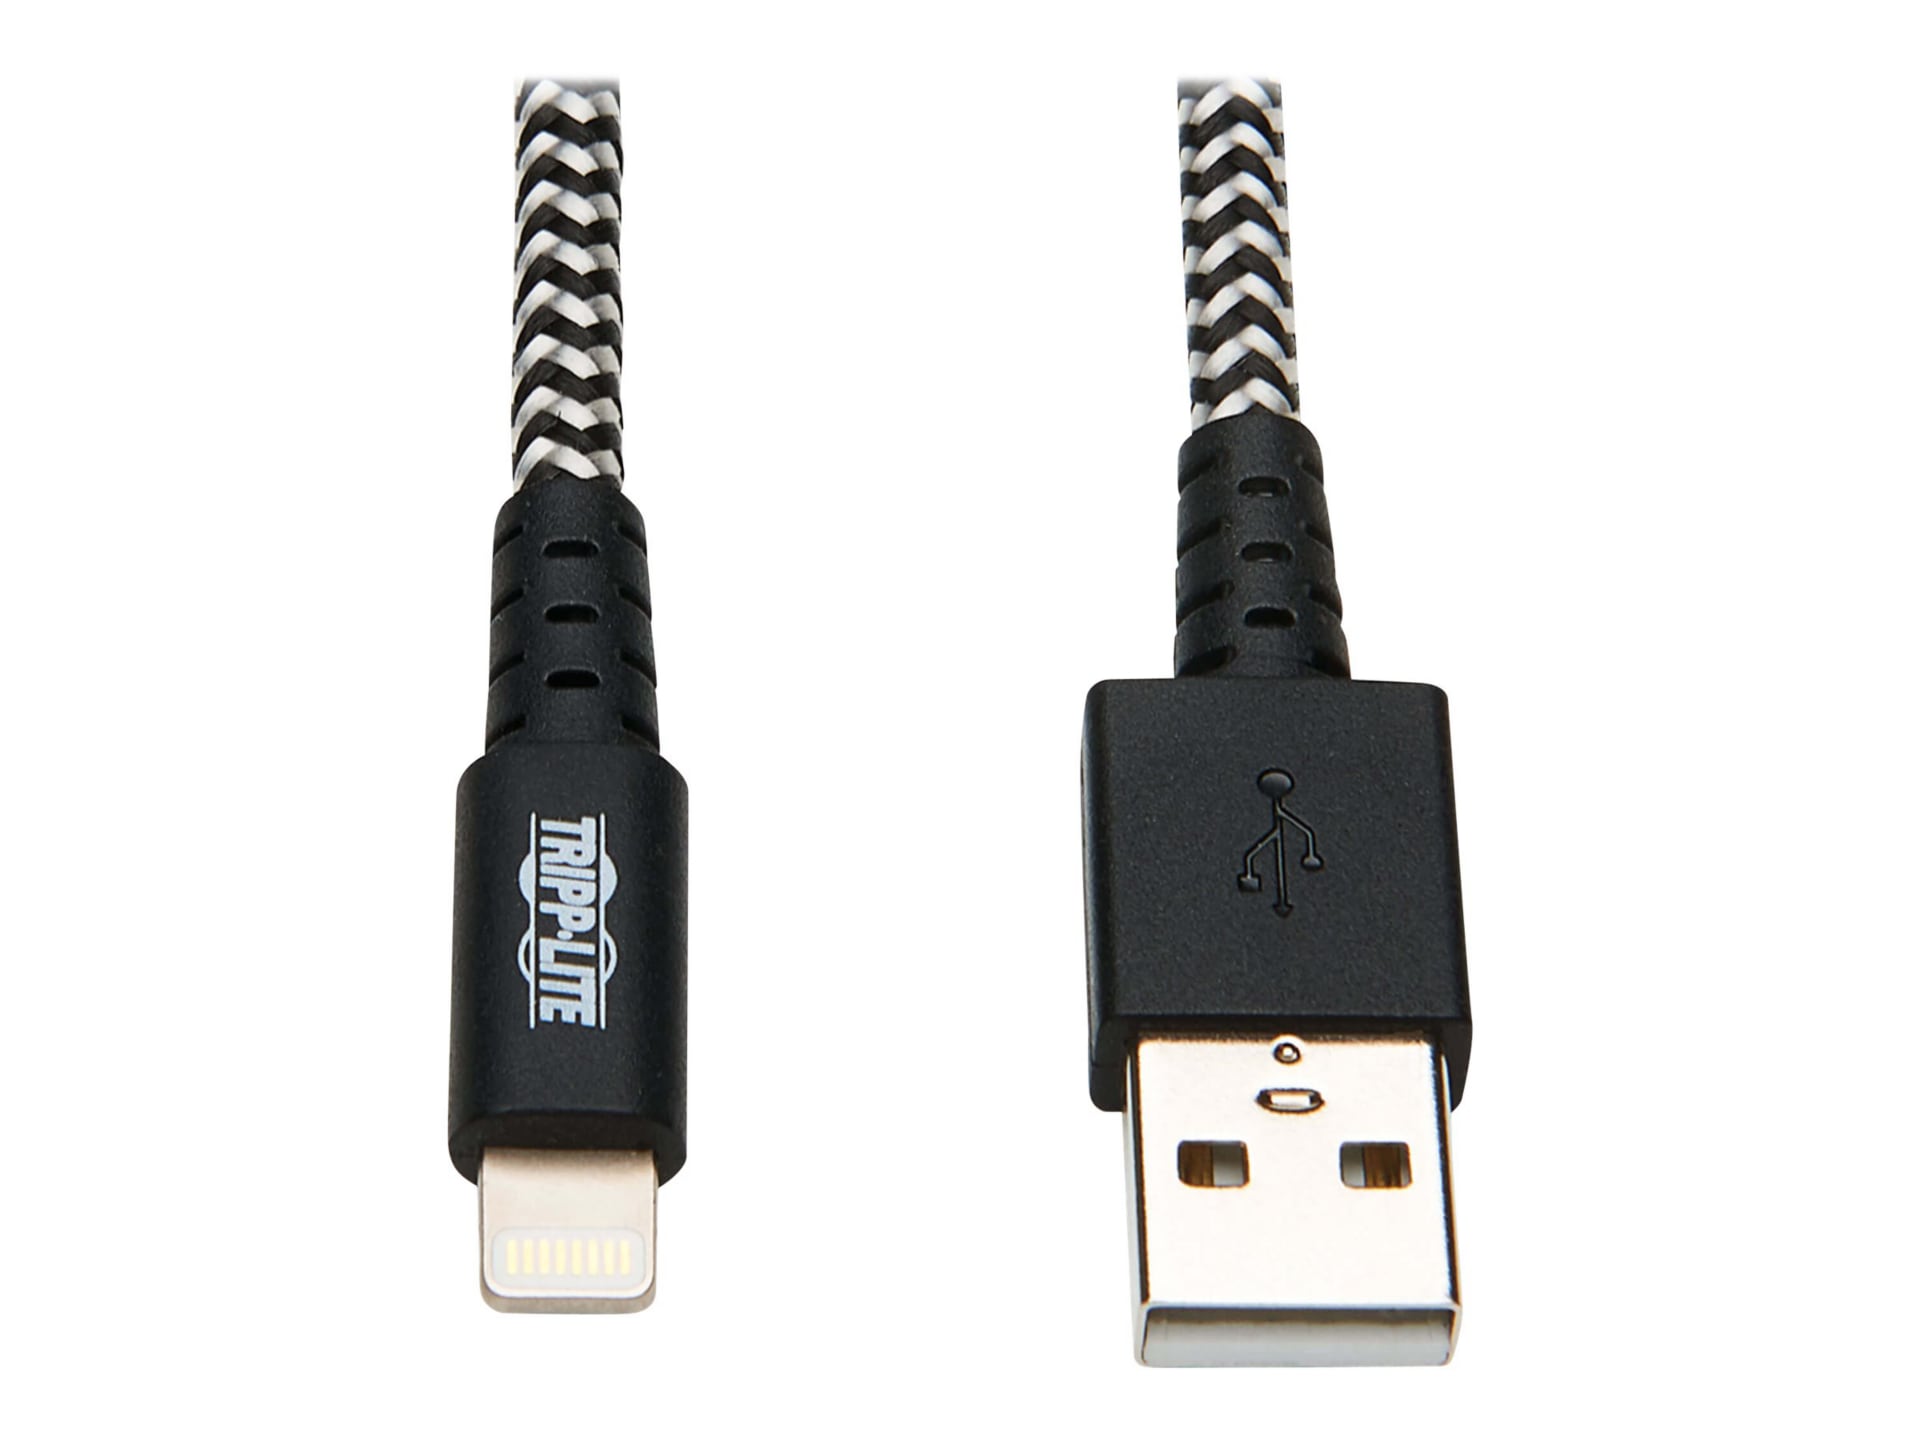 Câble Tripp Lite service intensif Lightning à USB synch./rech. iPhone iPad d’Apple, 10 pi